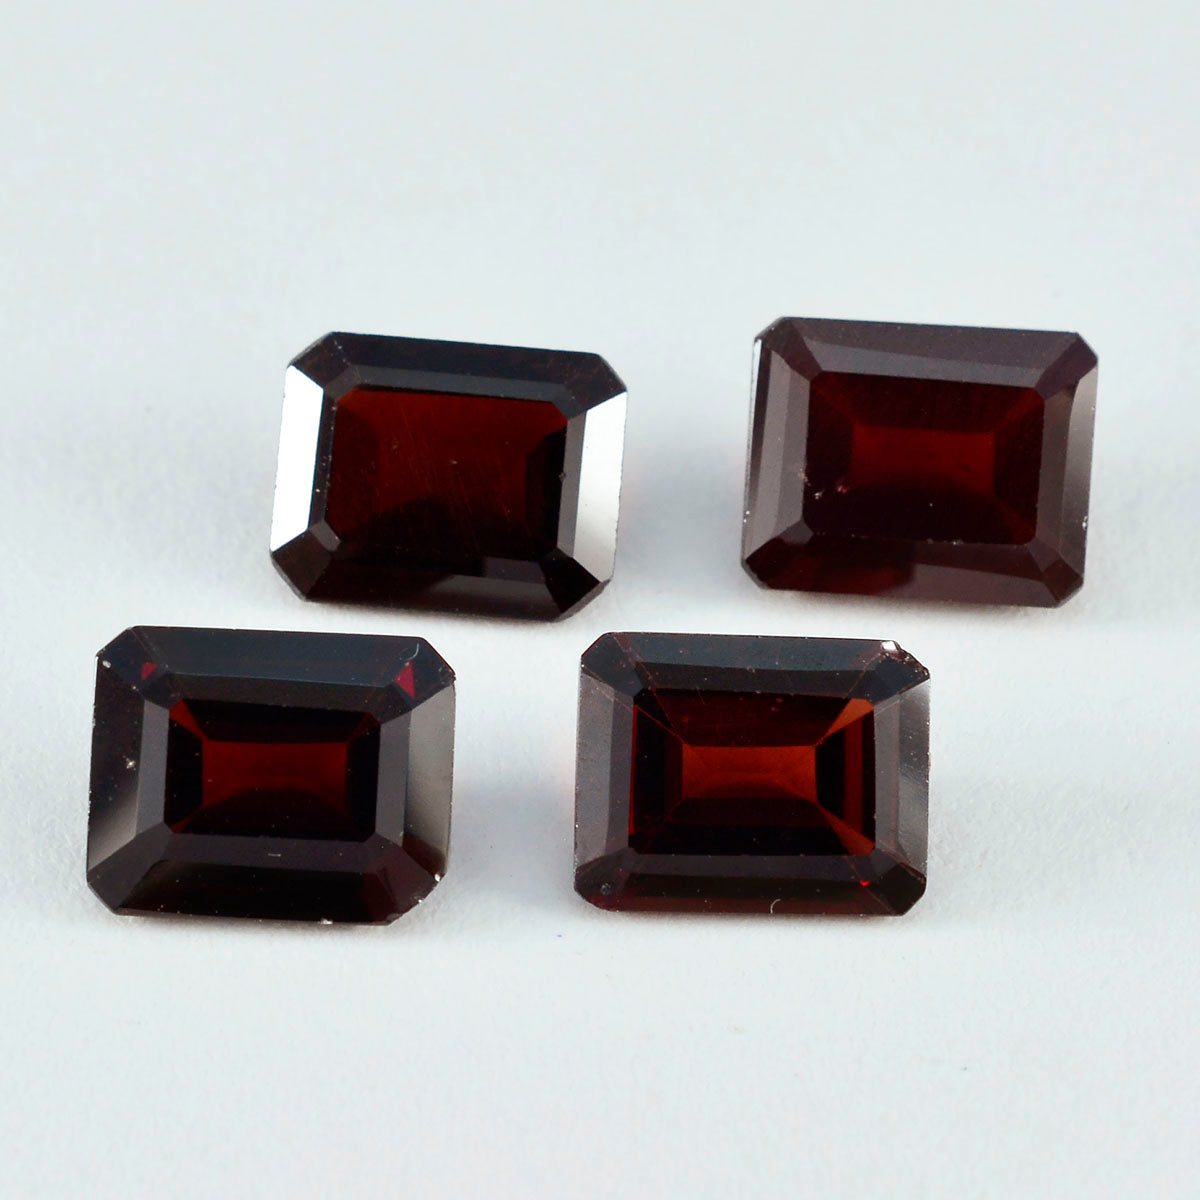 Riyogems 1PC Genuine Red Garnet Faceted 9x11 mm Octagon Shape attractive Quality Gem